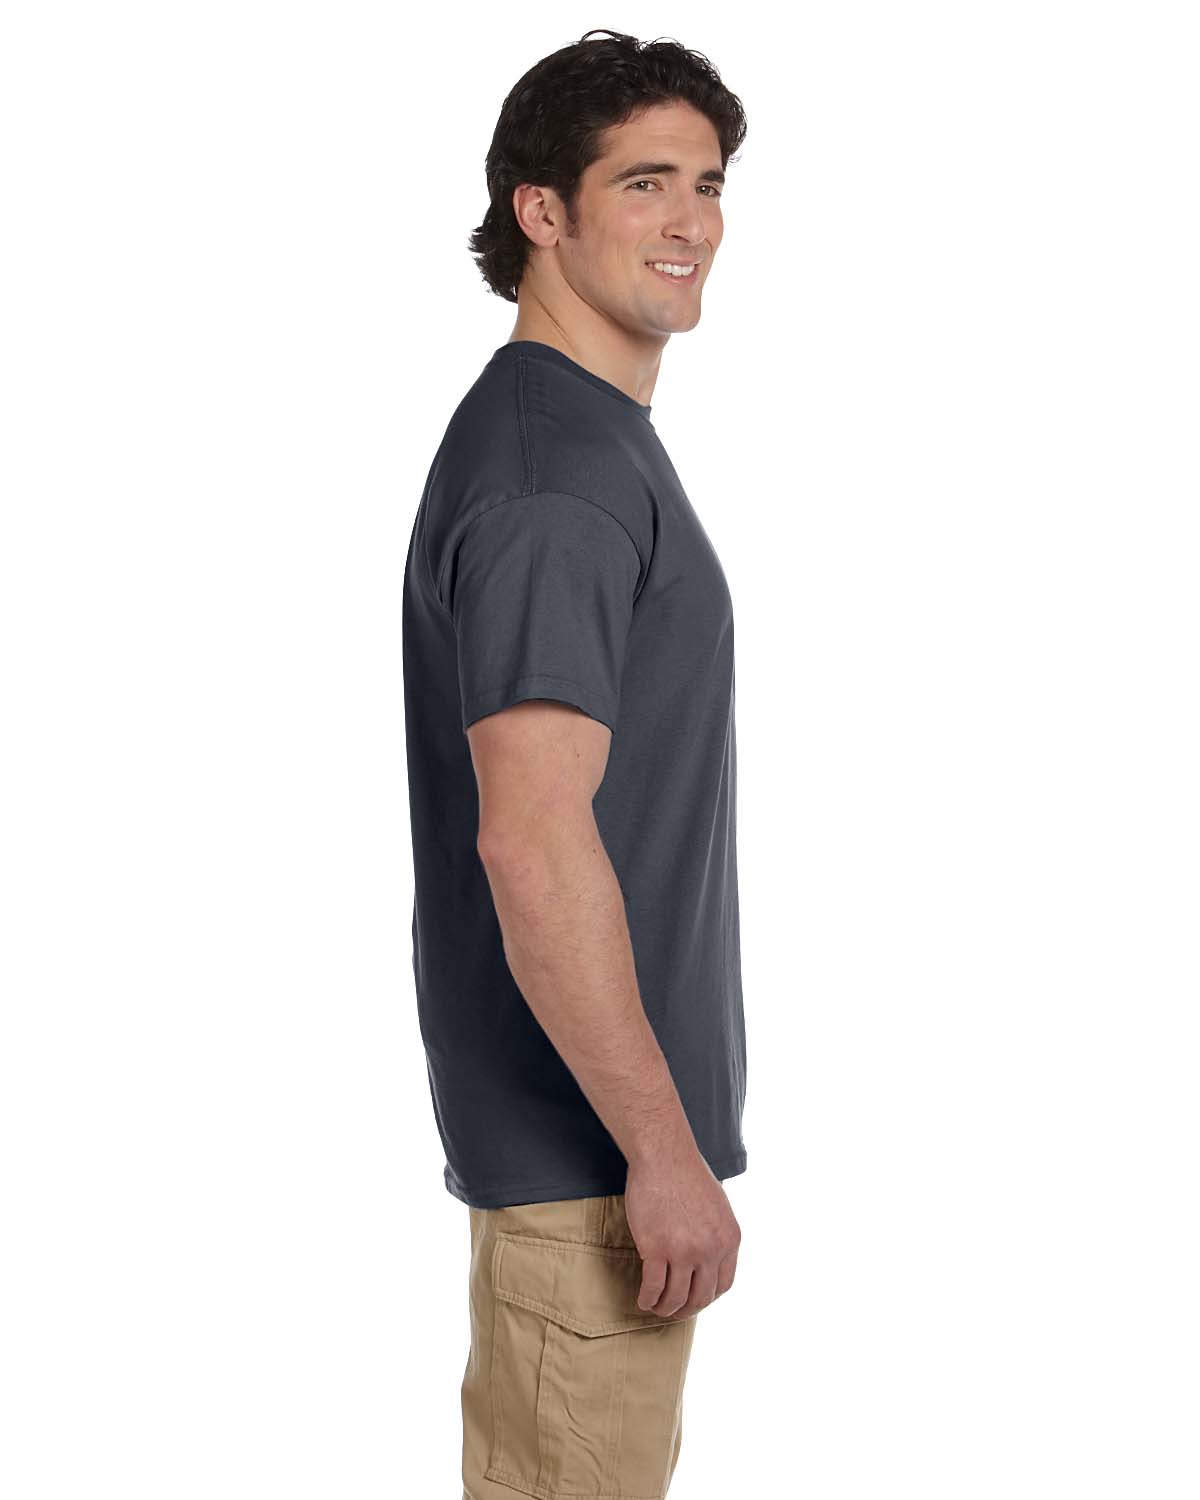 Hanes Mens T-Shirt ComfortBlend 50/50 EcoSmart Crewneck Tee S-4XL 5170